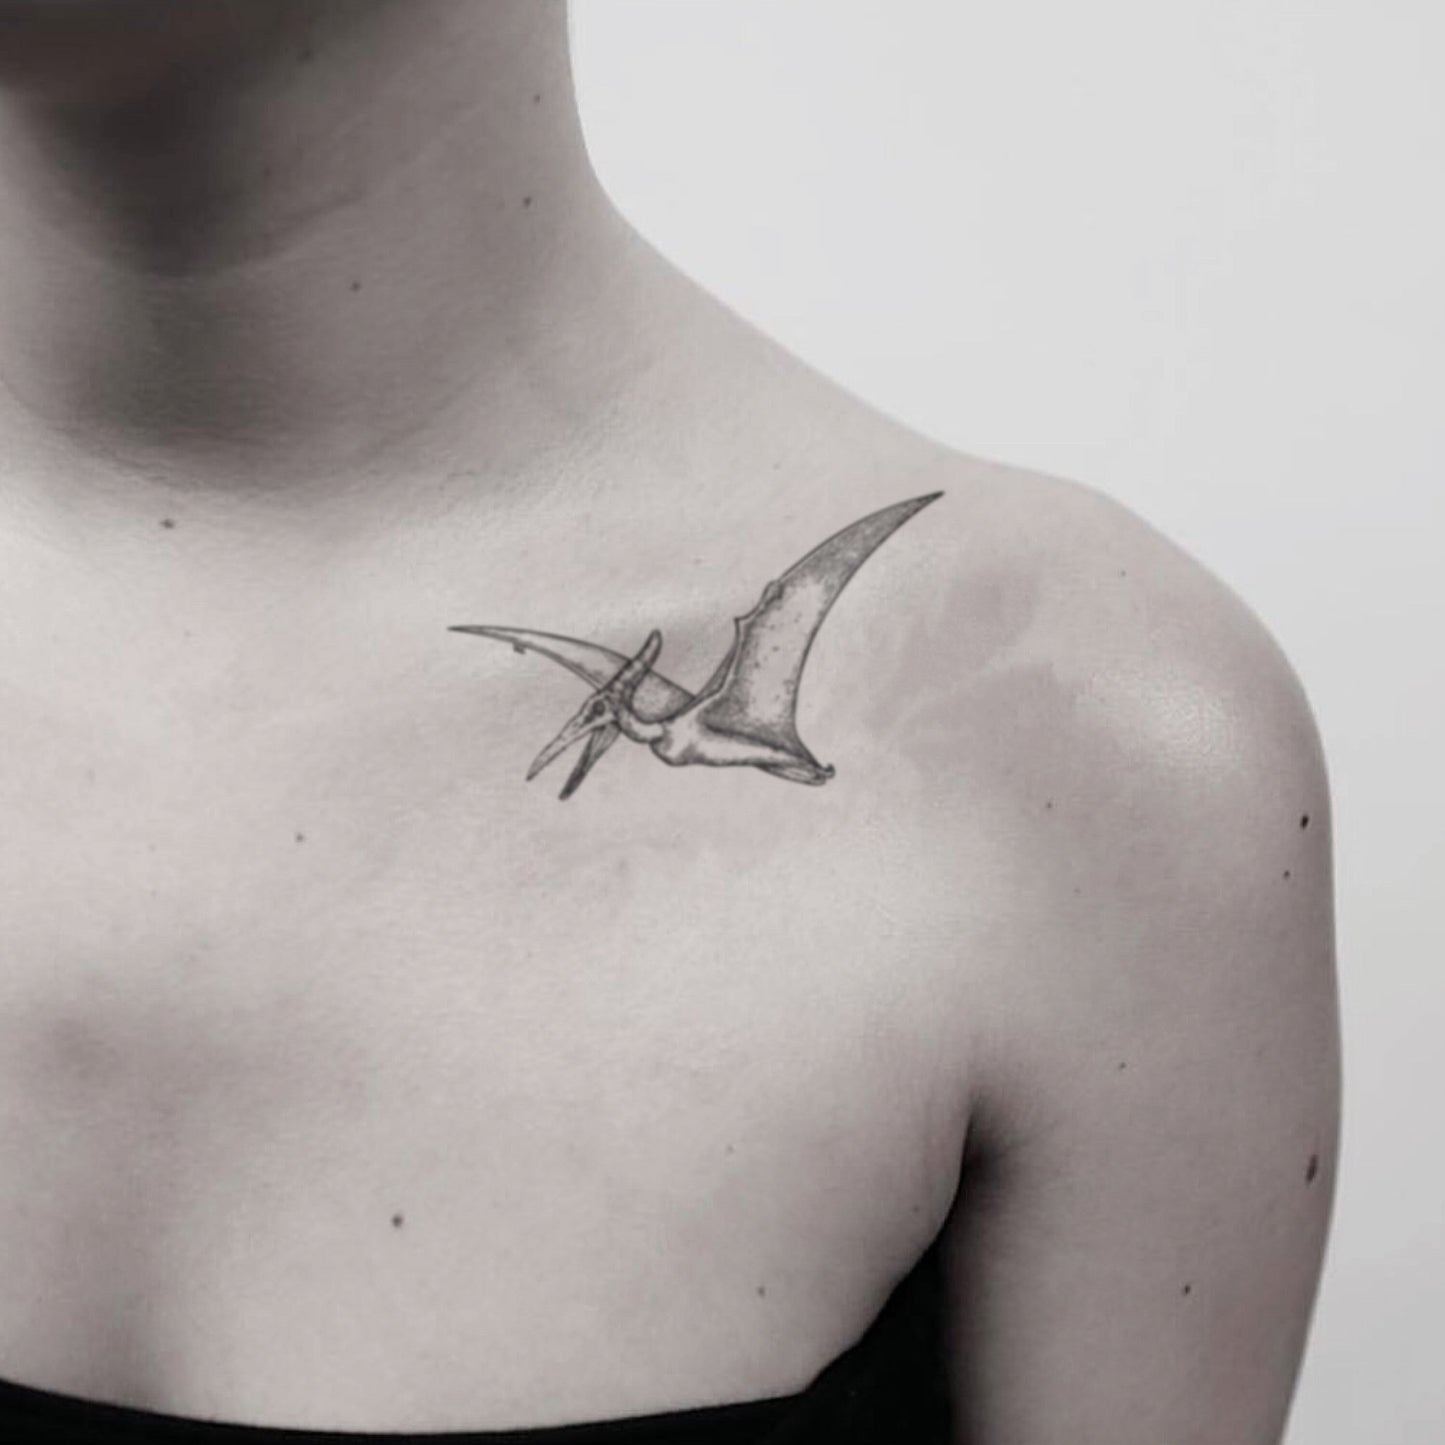 fake medium pterodactyl dinosaur animal temporary tattoo sticker design idea on shoulder